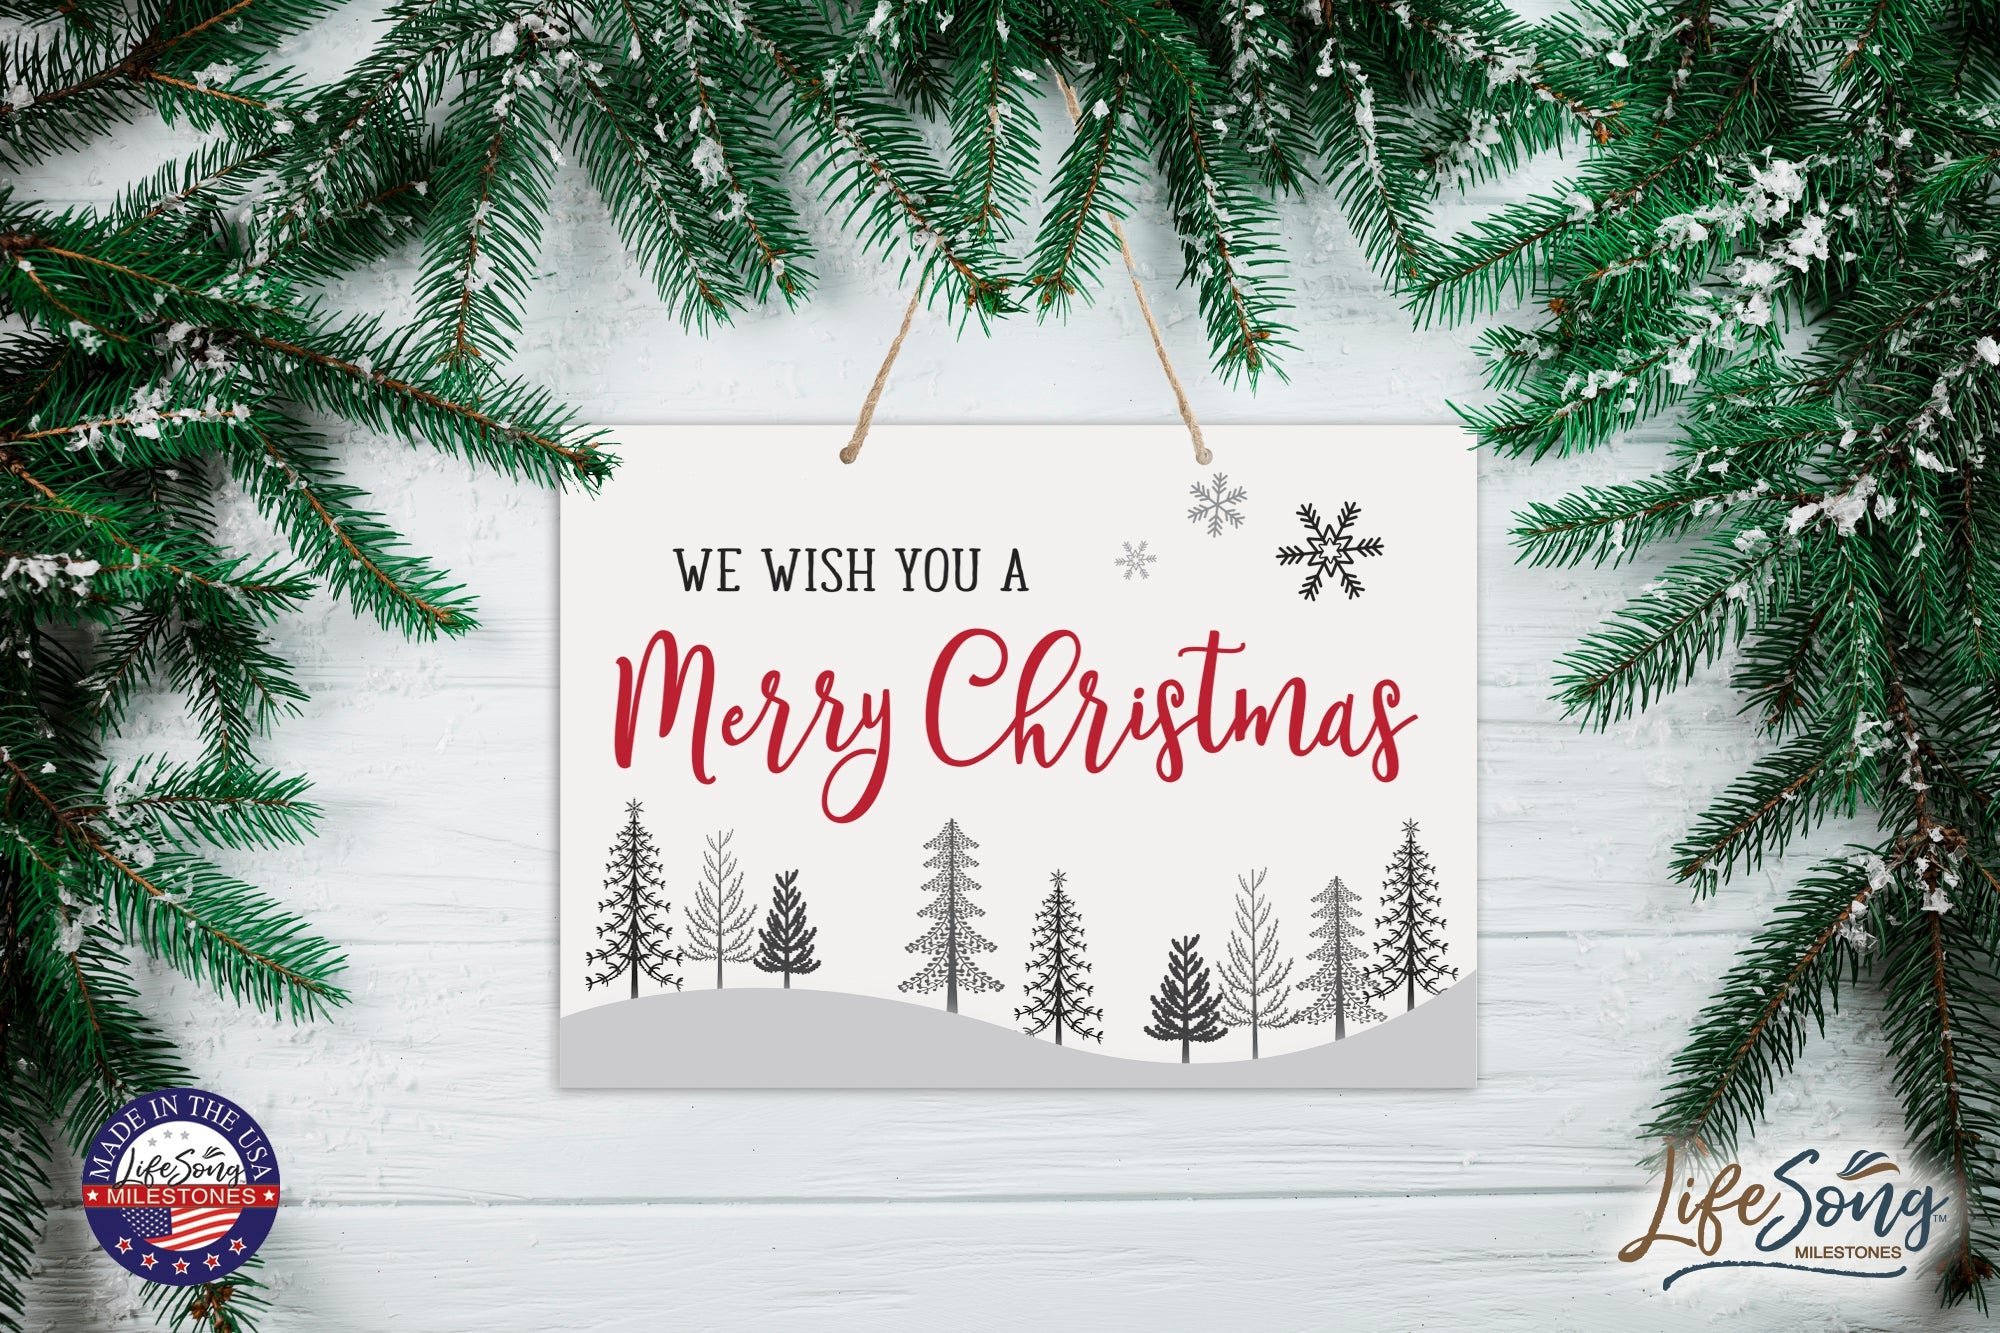 Merry Christmas Wall Hanging Sign - We Wish You - LifeSong Milestones